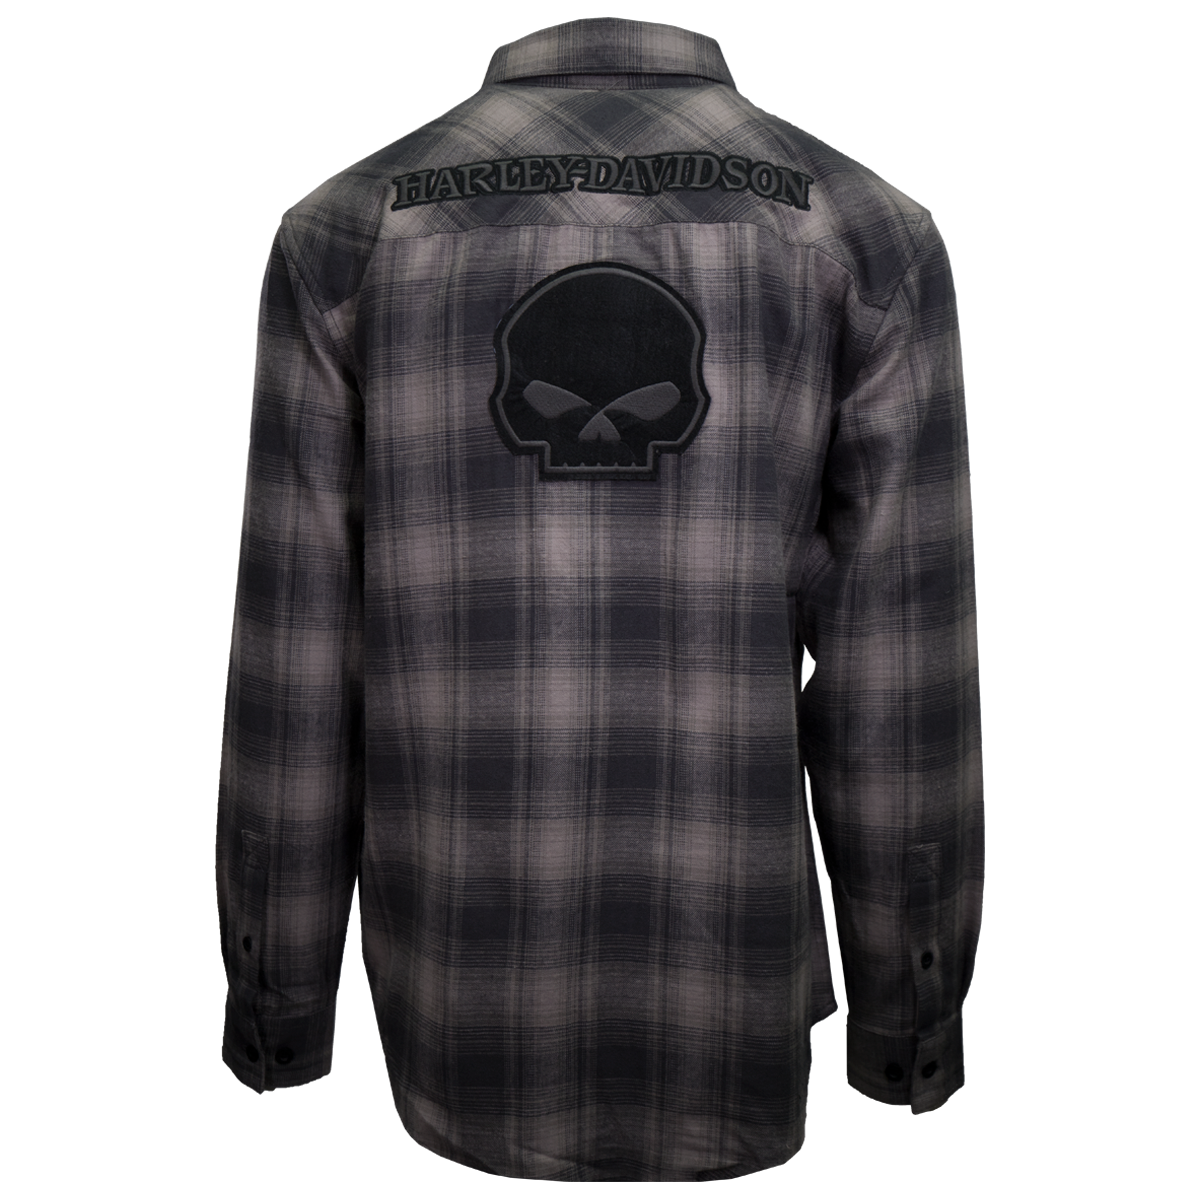 Harley-Davidson Men's Grey Plaid Skull L/S Woven Shirt (S04) - Size L